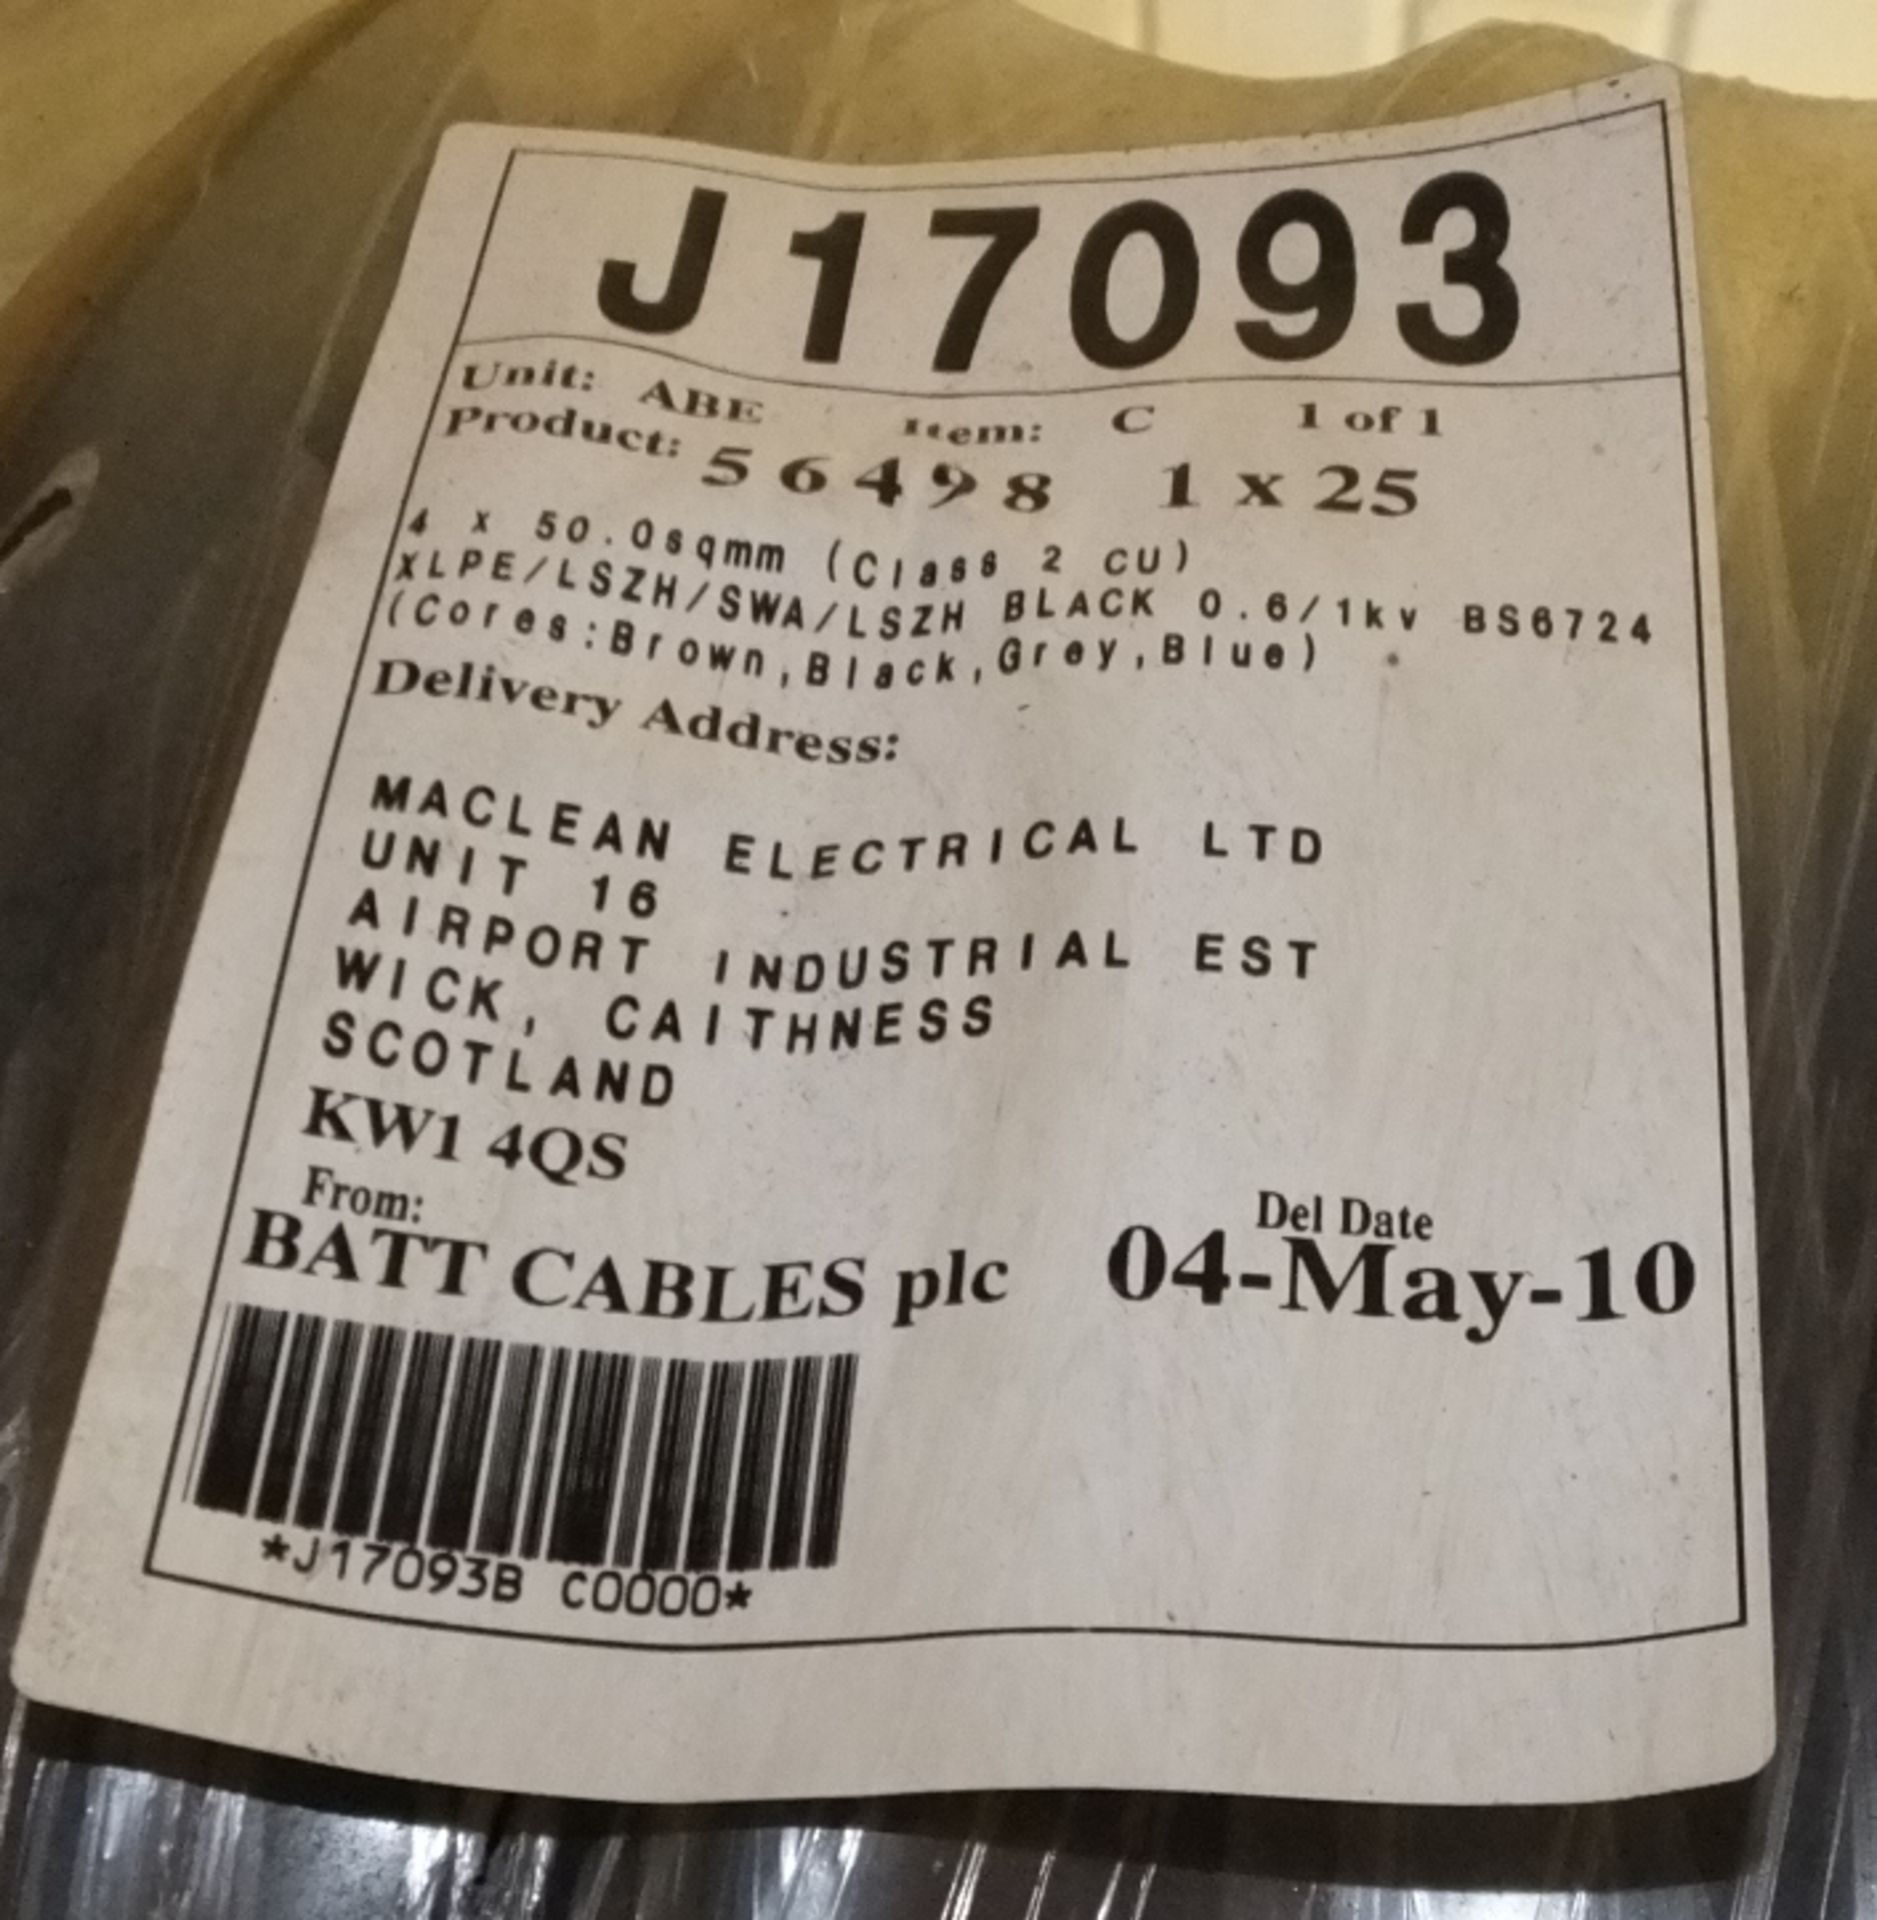 2x Batt Cable reels - 1x 4 core 4mm XLPE/LSF/SWA/LSF black 100M, 1x 50mm 4 core LSF/SWA - Image 4 of 5